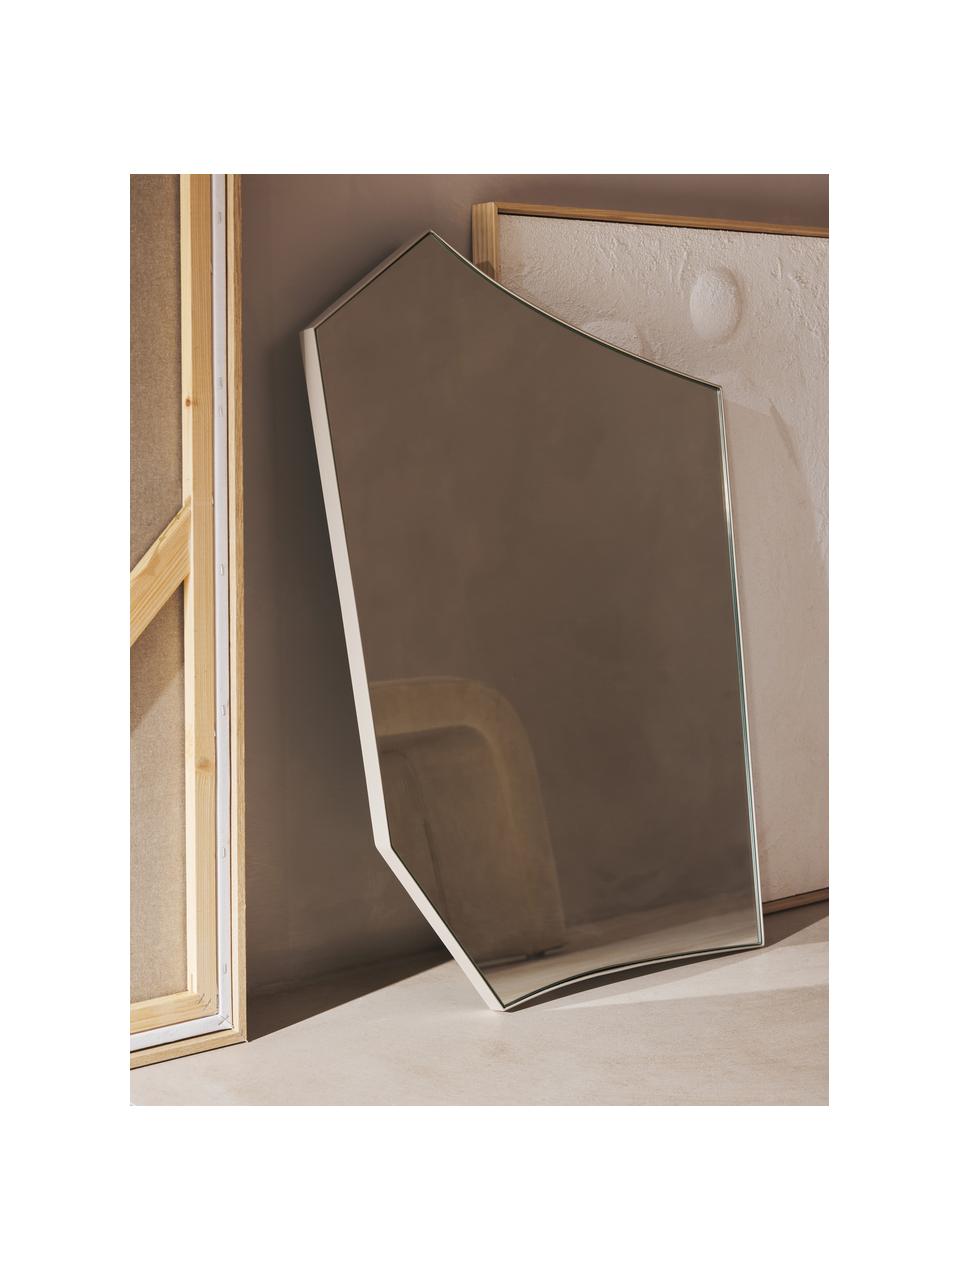 Nástěnné zrcadlo Rocco, Stříbrná, Š 60 cm, V 80 cm